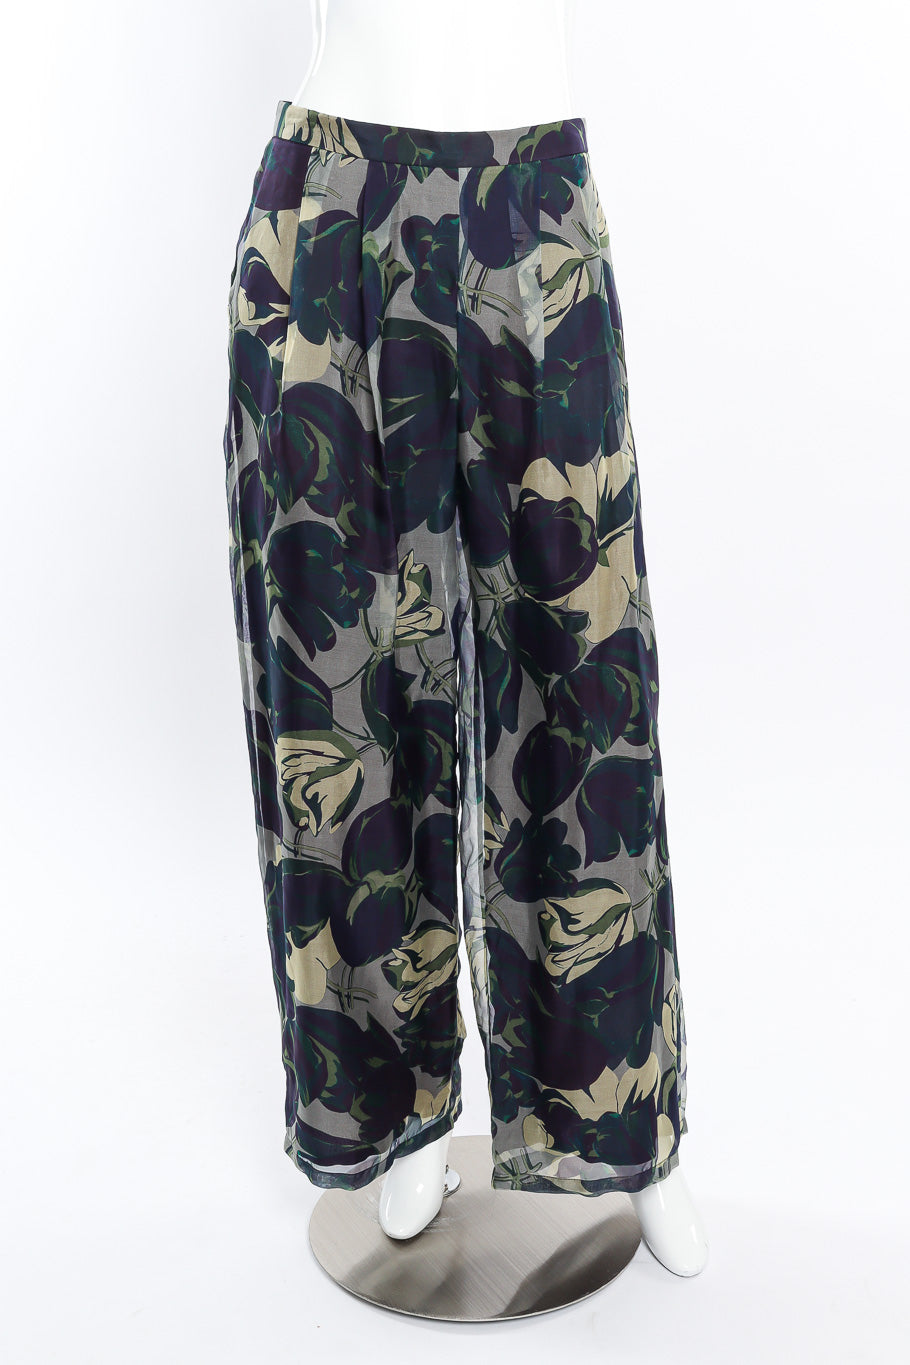 Dries Van Noten Floral Silk Lounge Pant front view on mannequin @Recessla